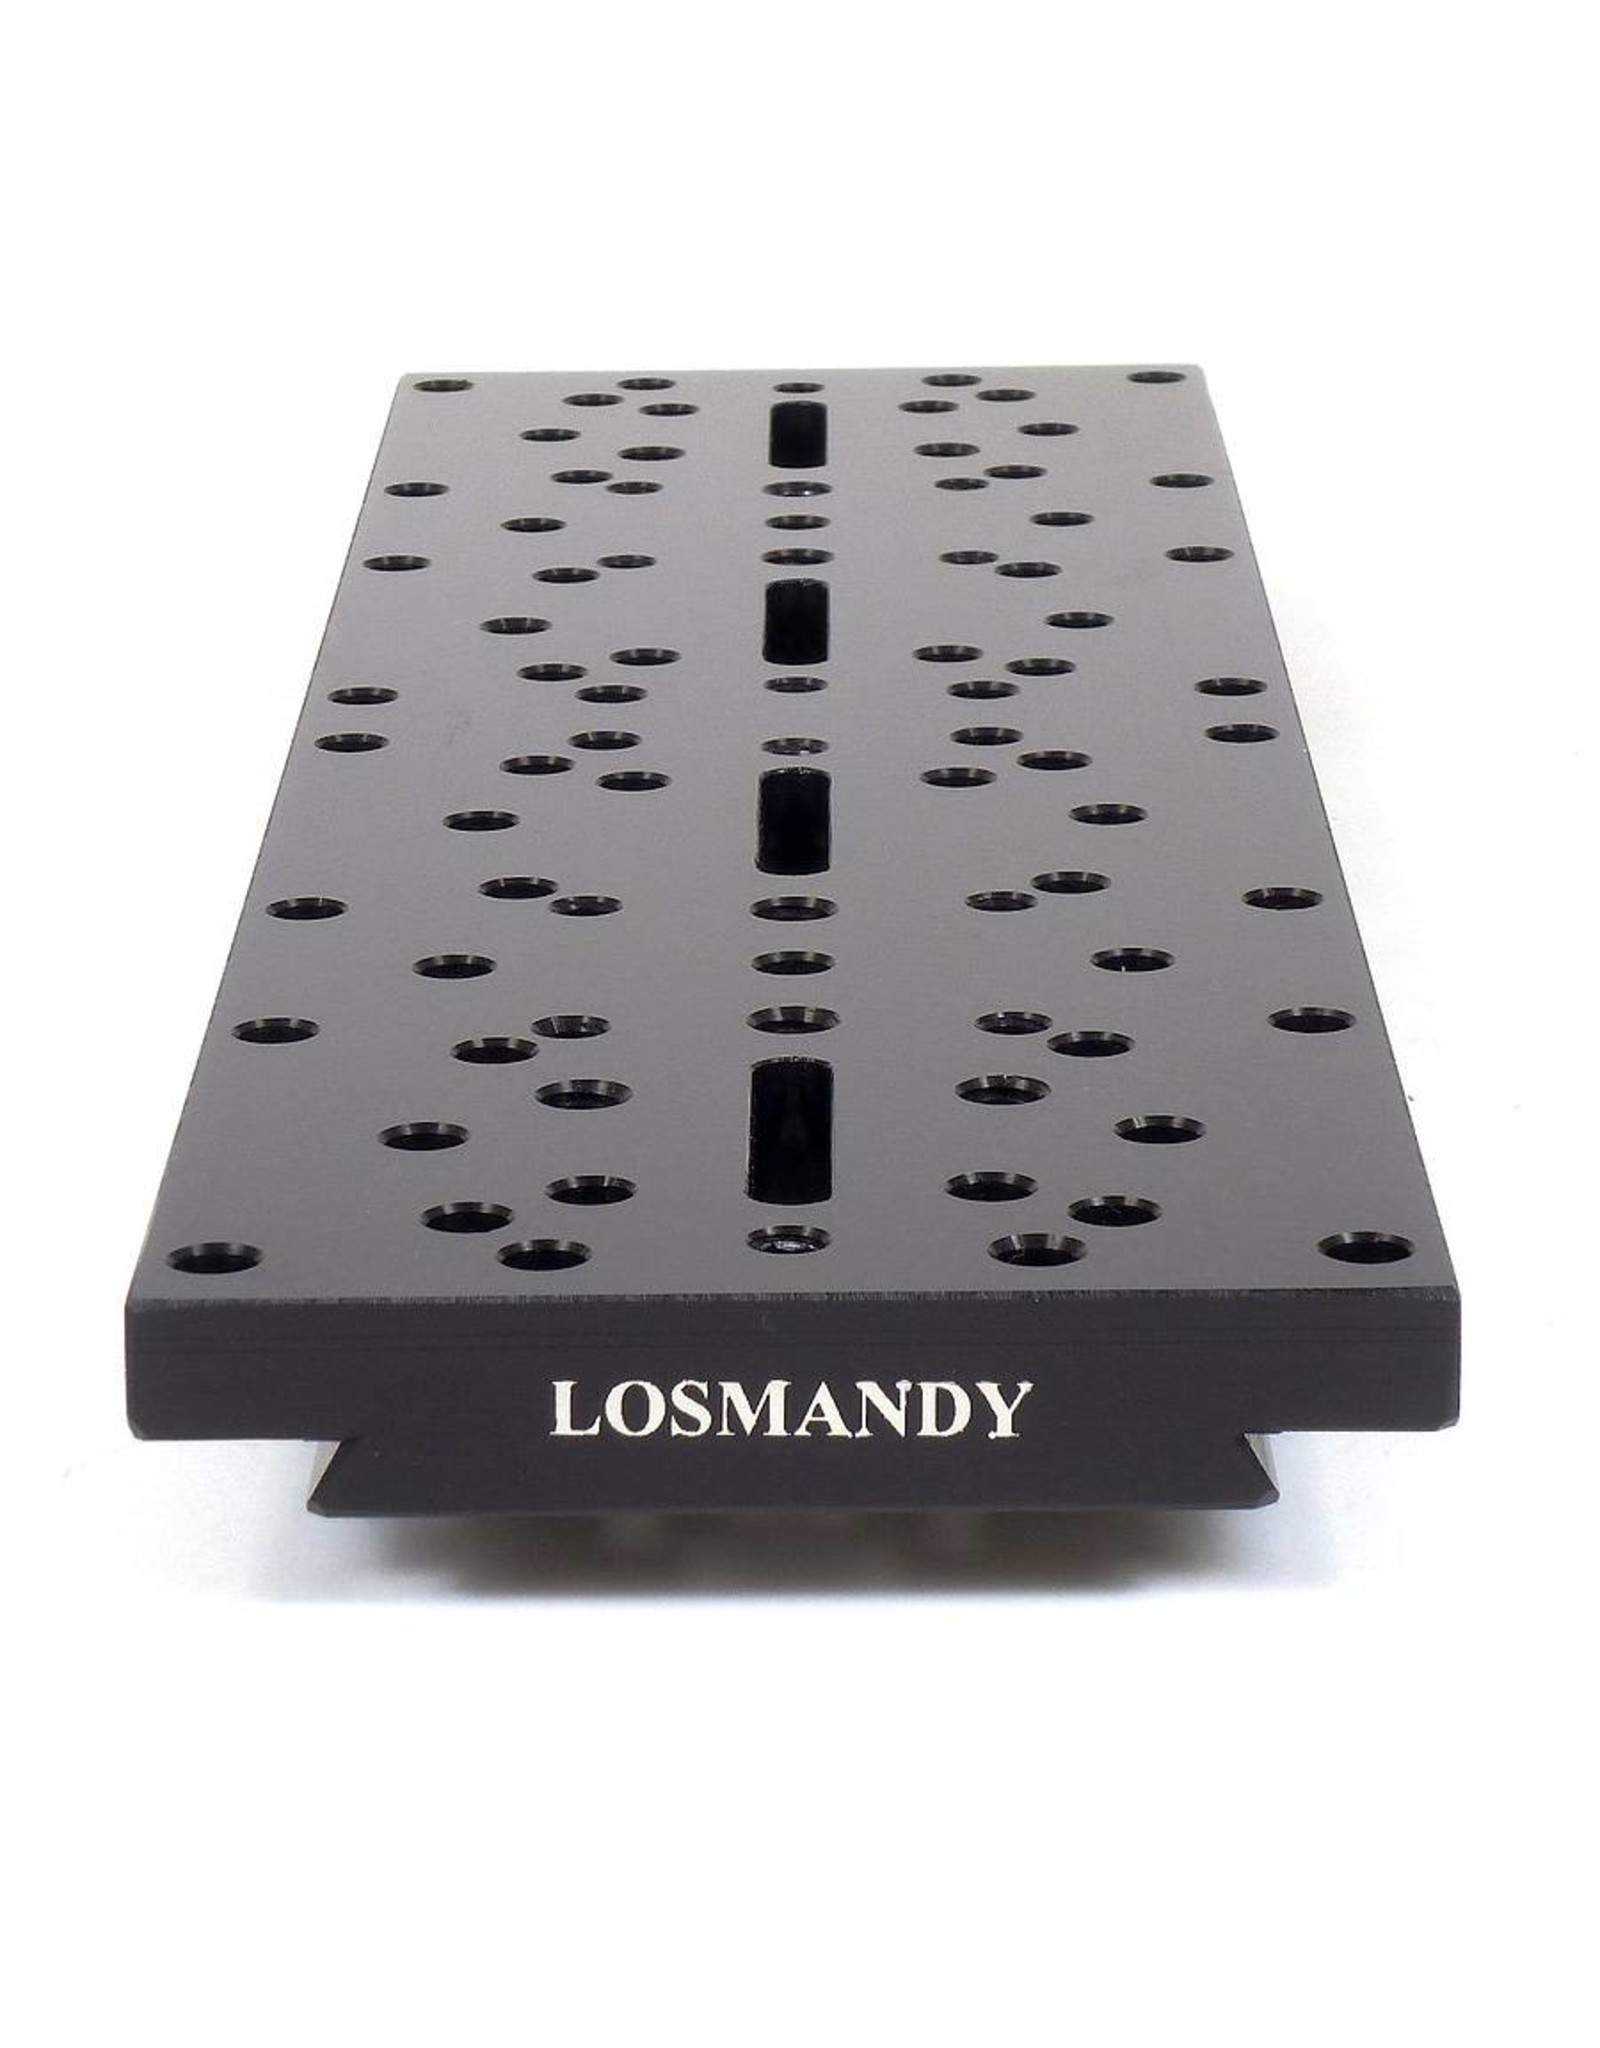 Losmandy Losmandy DUP14 Universal Dovetail Plate